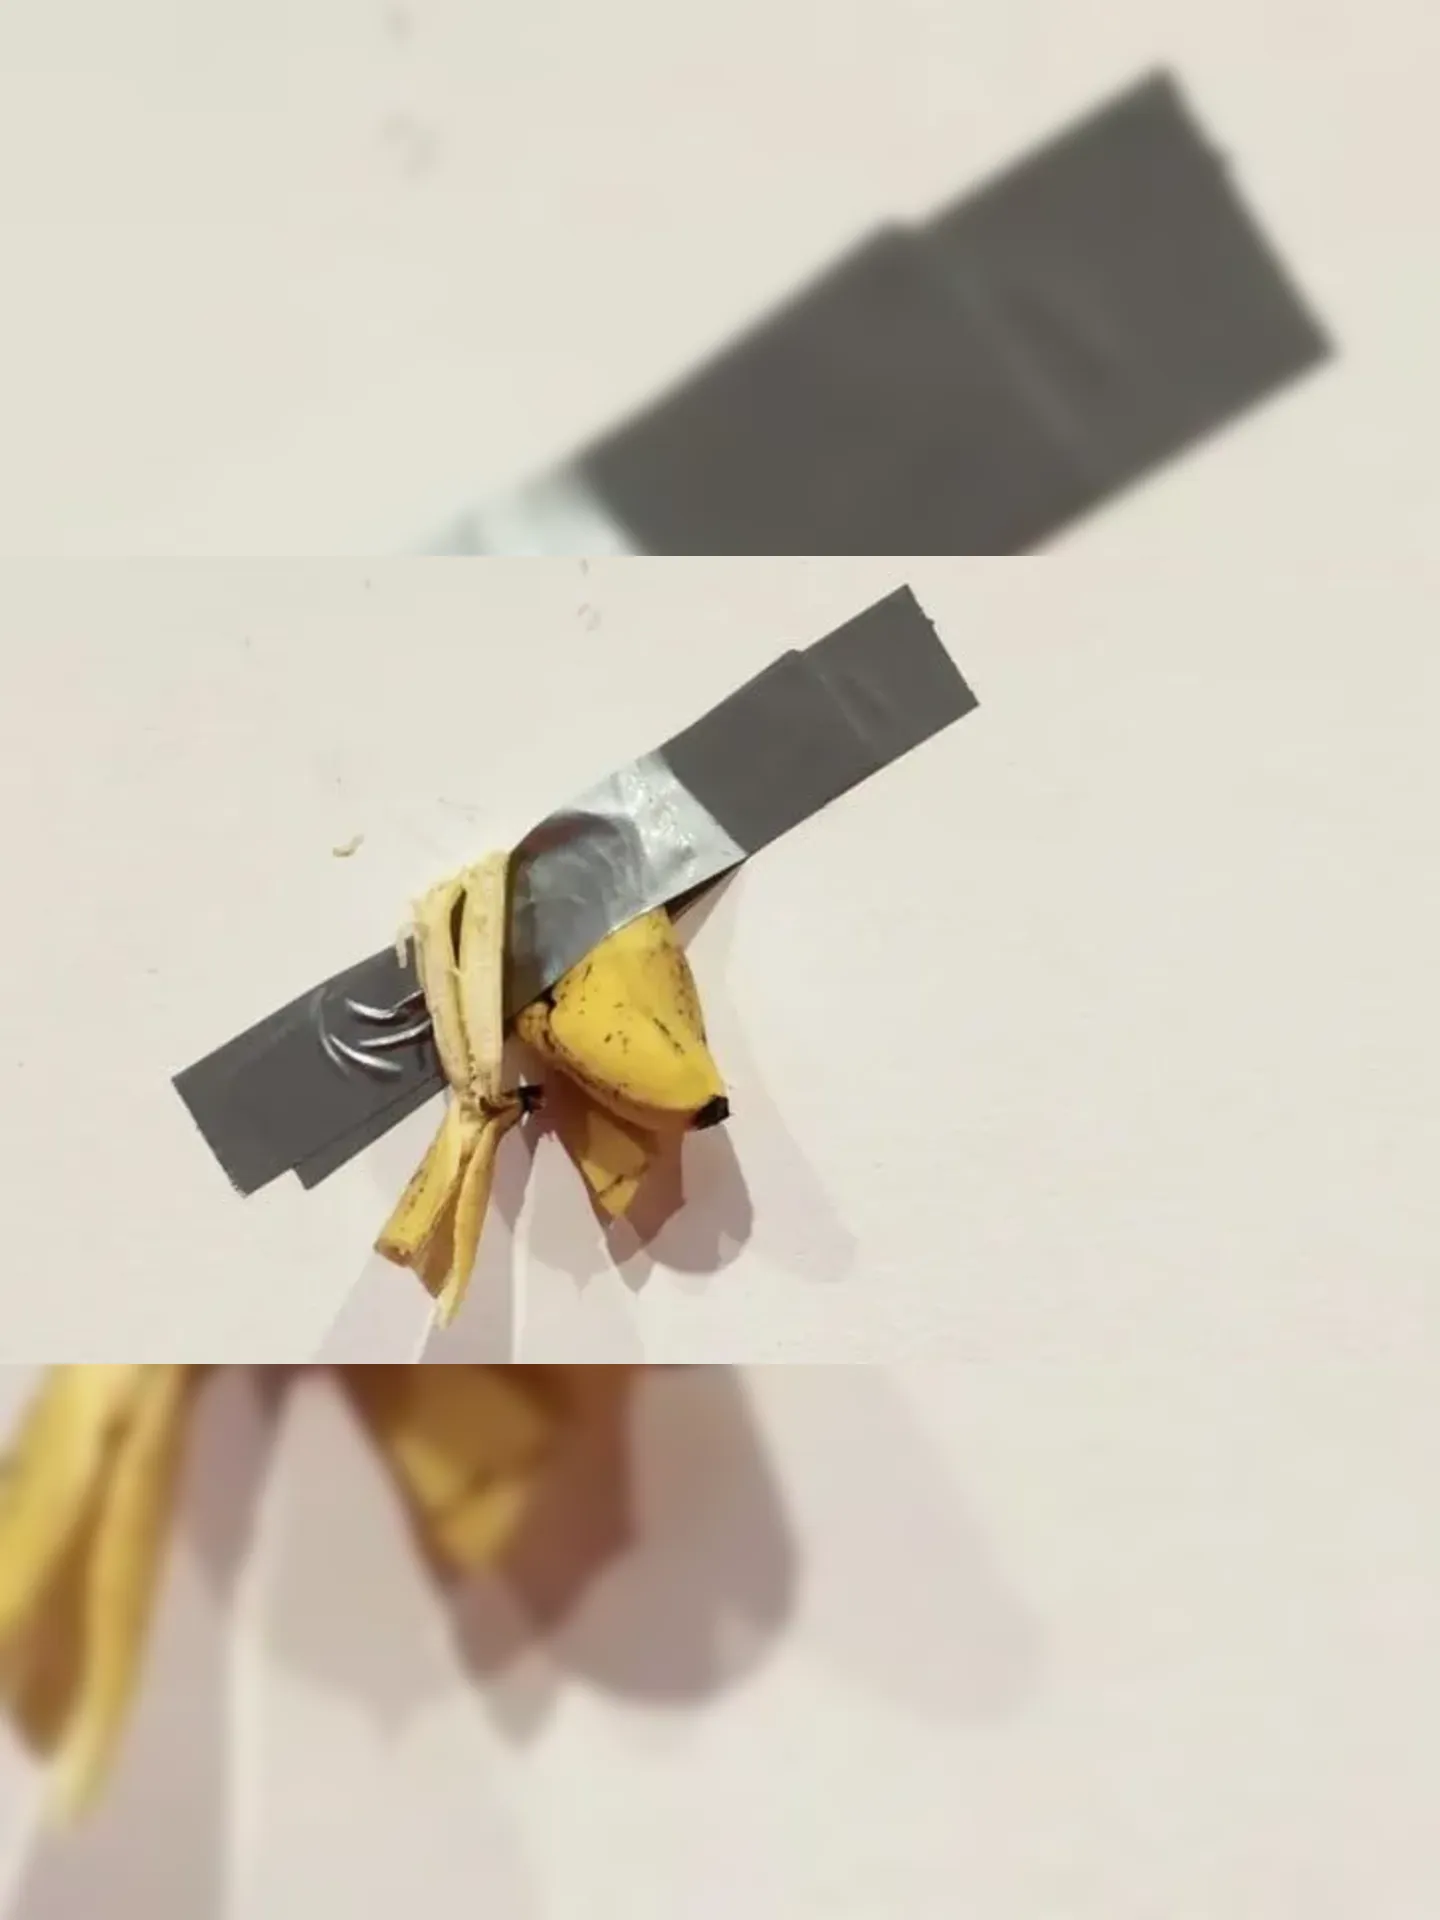 Depois de comê-la, estudante prendeu a banana na fita adesiva novamente